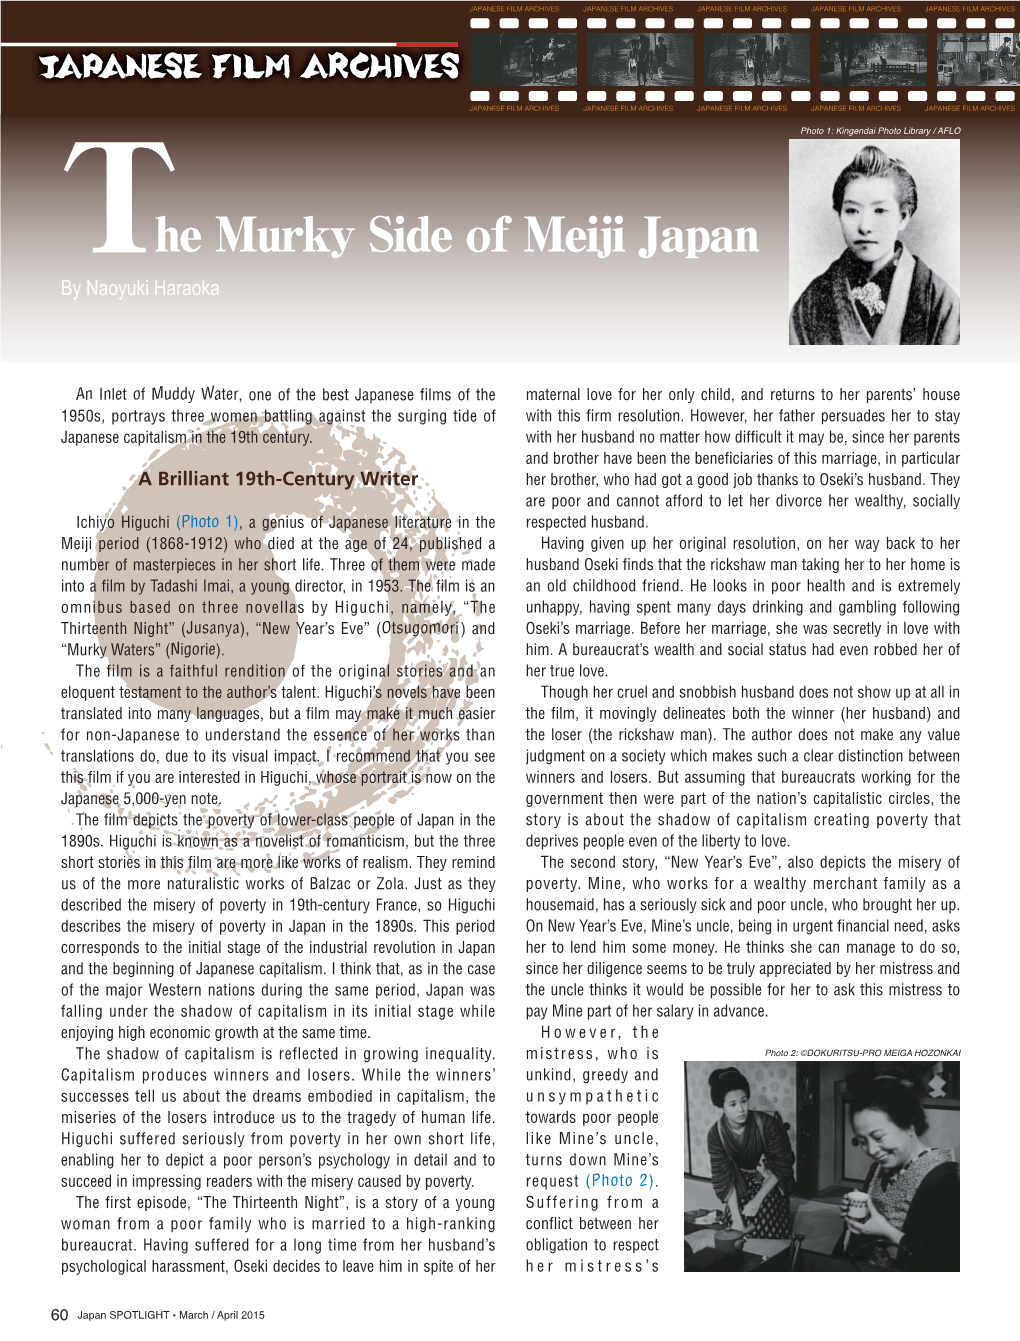 He Murky Side of Meiji Japan by Naoyuki Haraoka